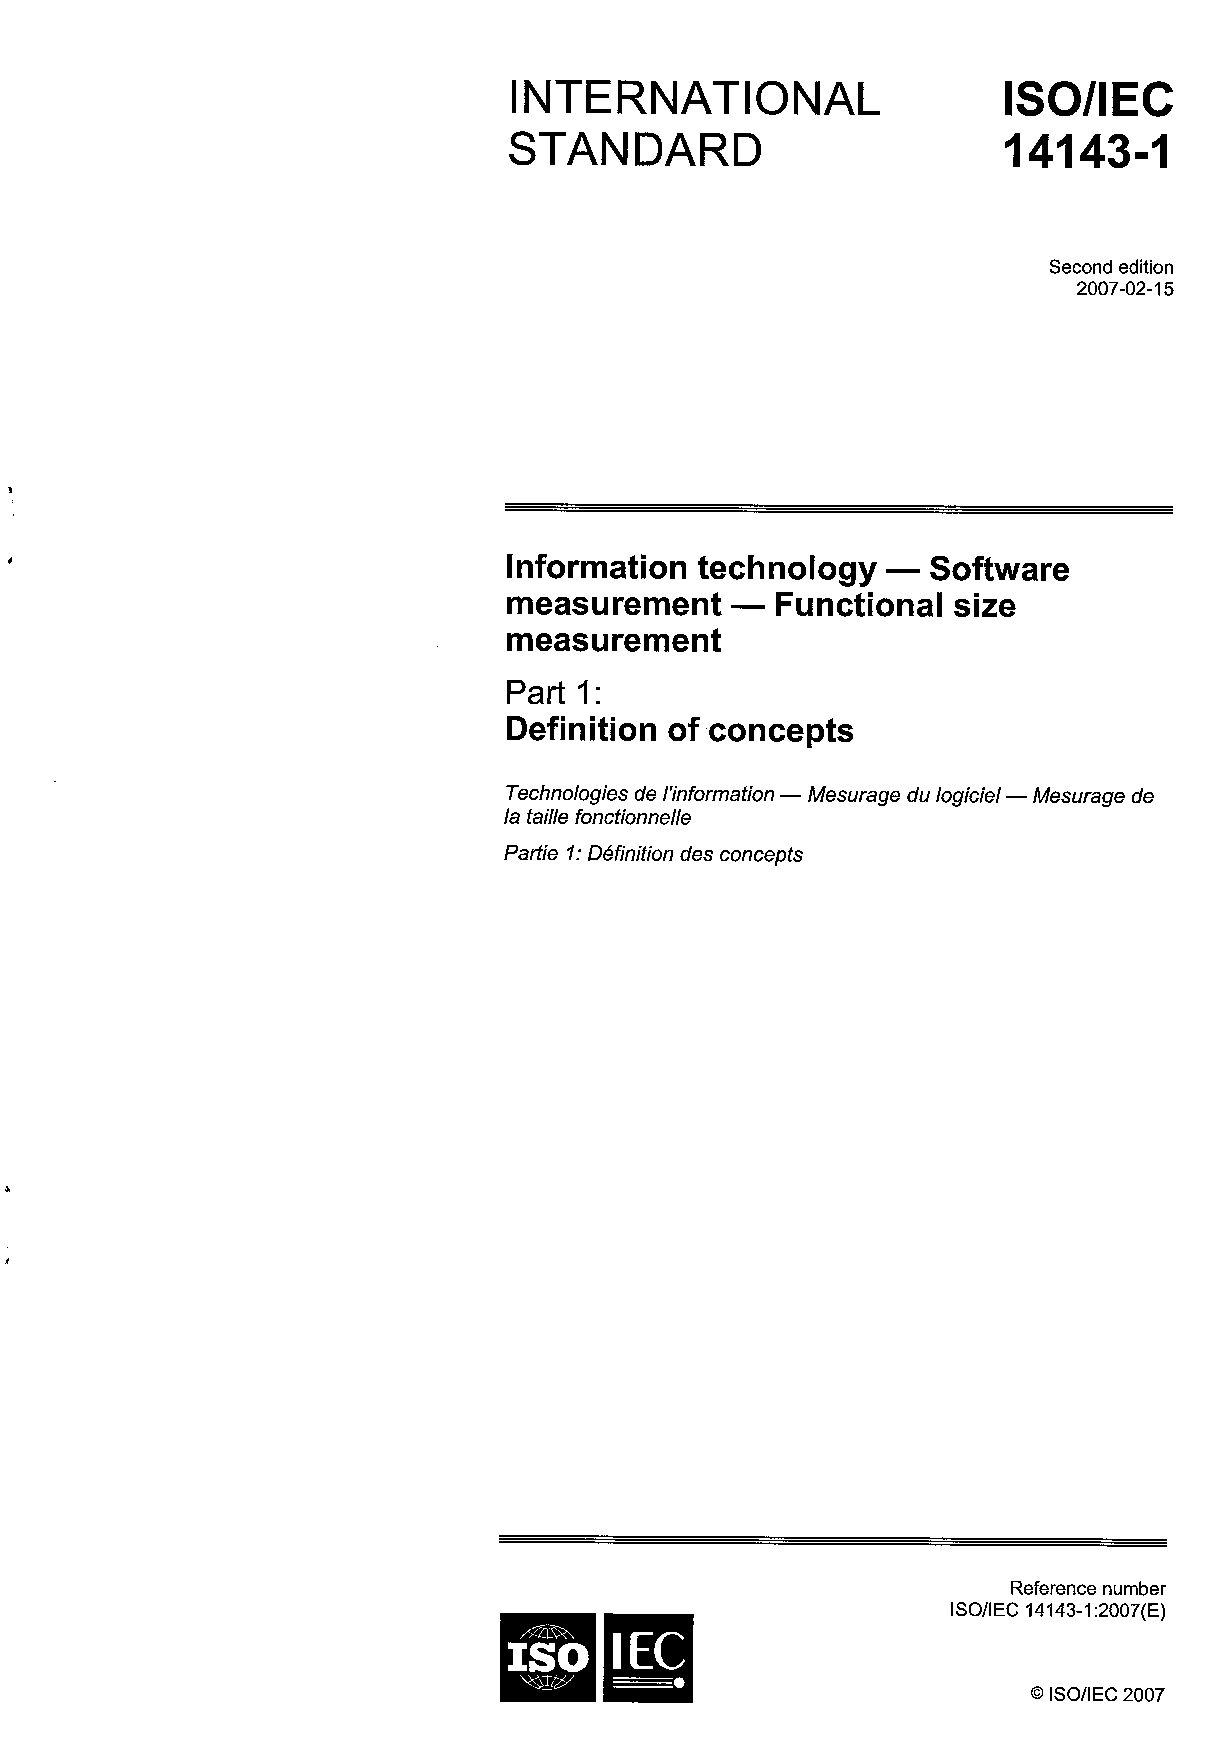 ISO/IEC 14143-1:2007